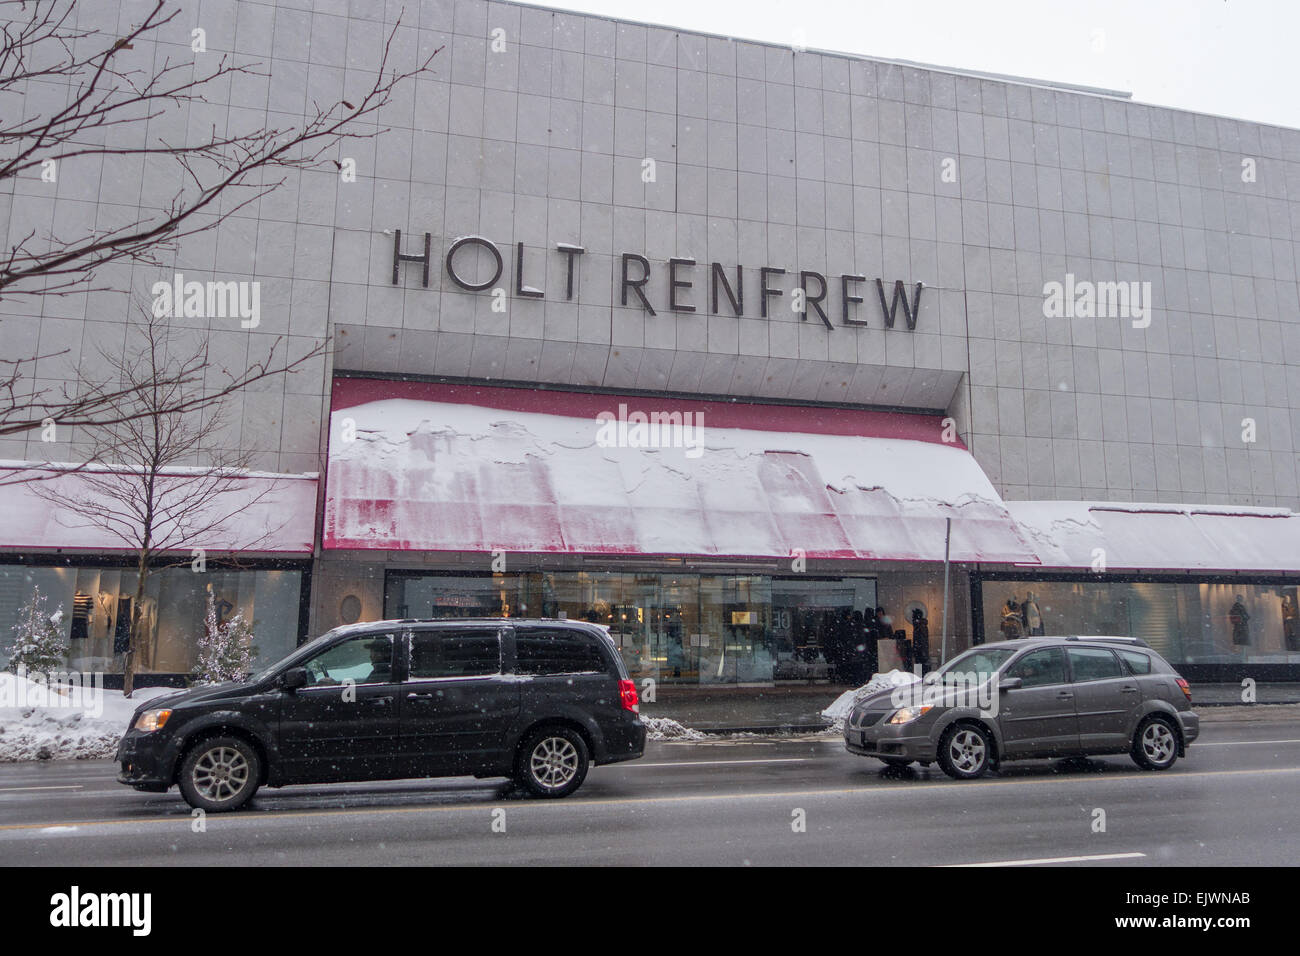 Louis Vuitton Holt Renfrew Ogilvy store, Canada